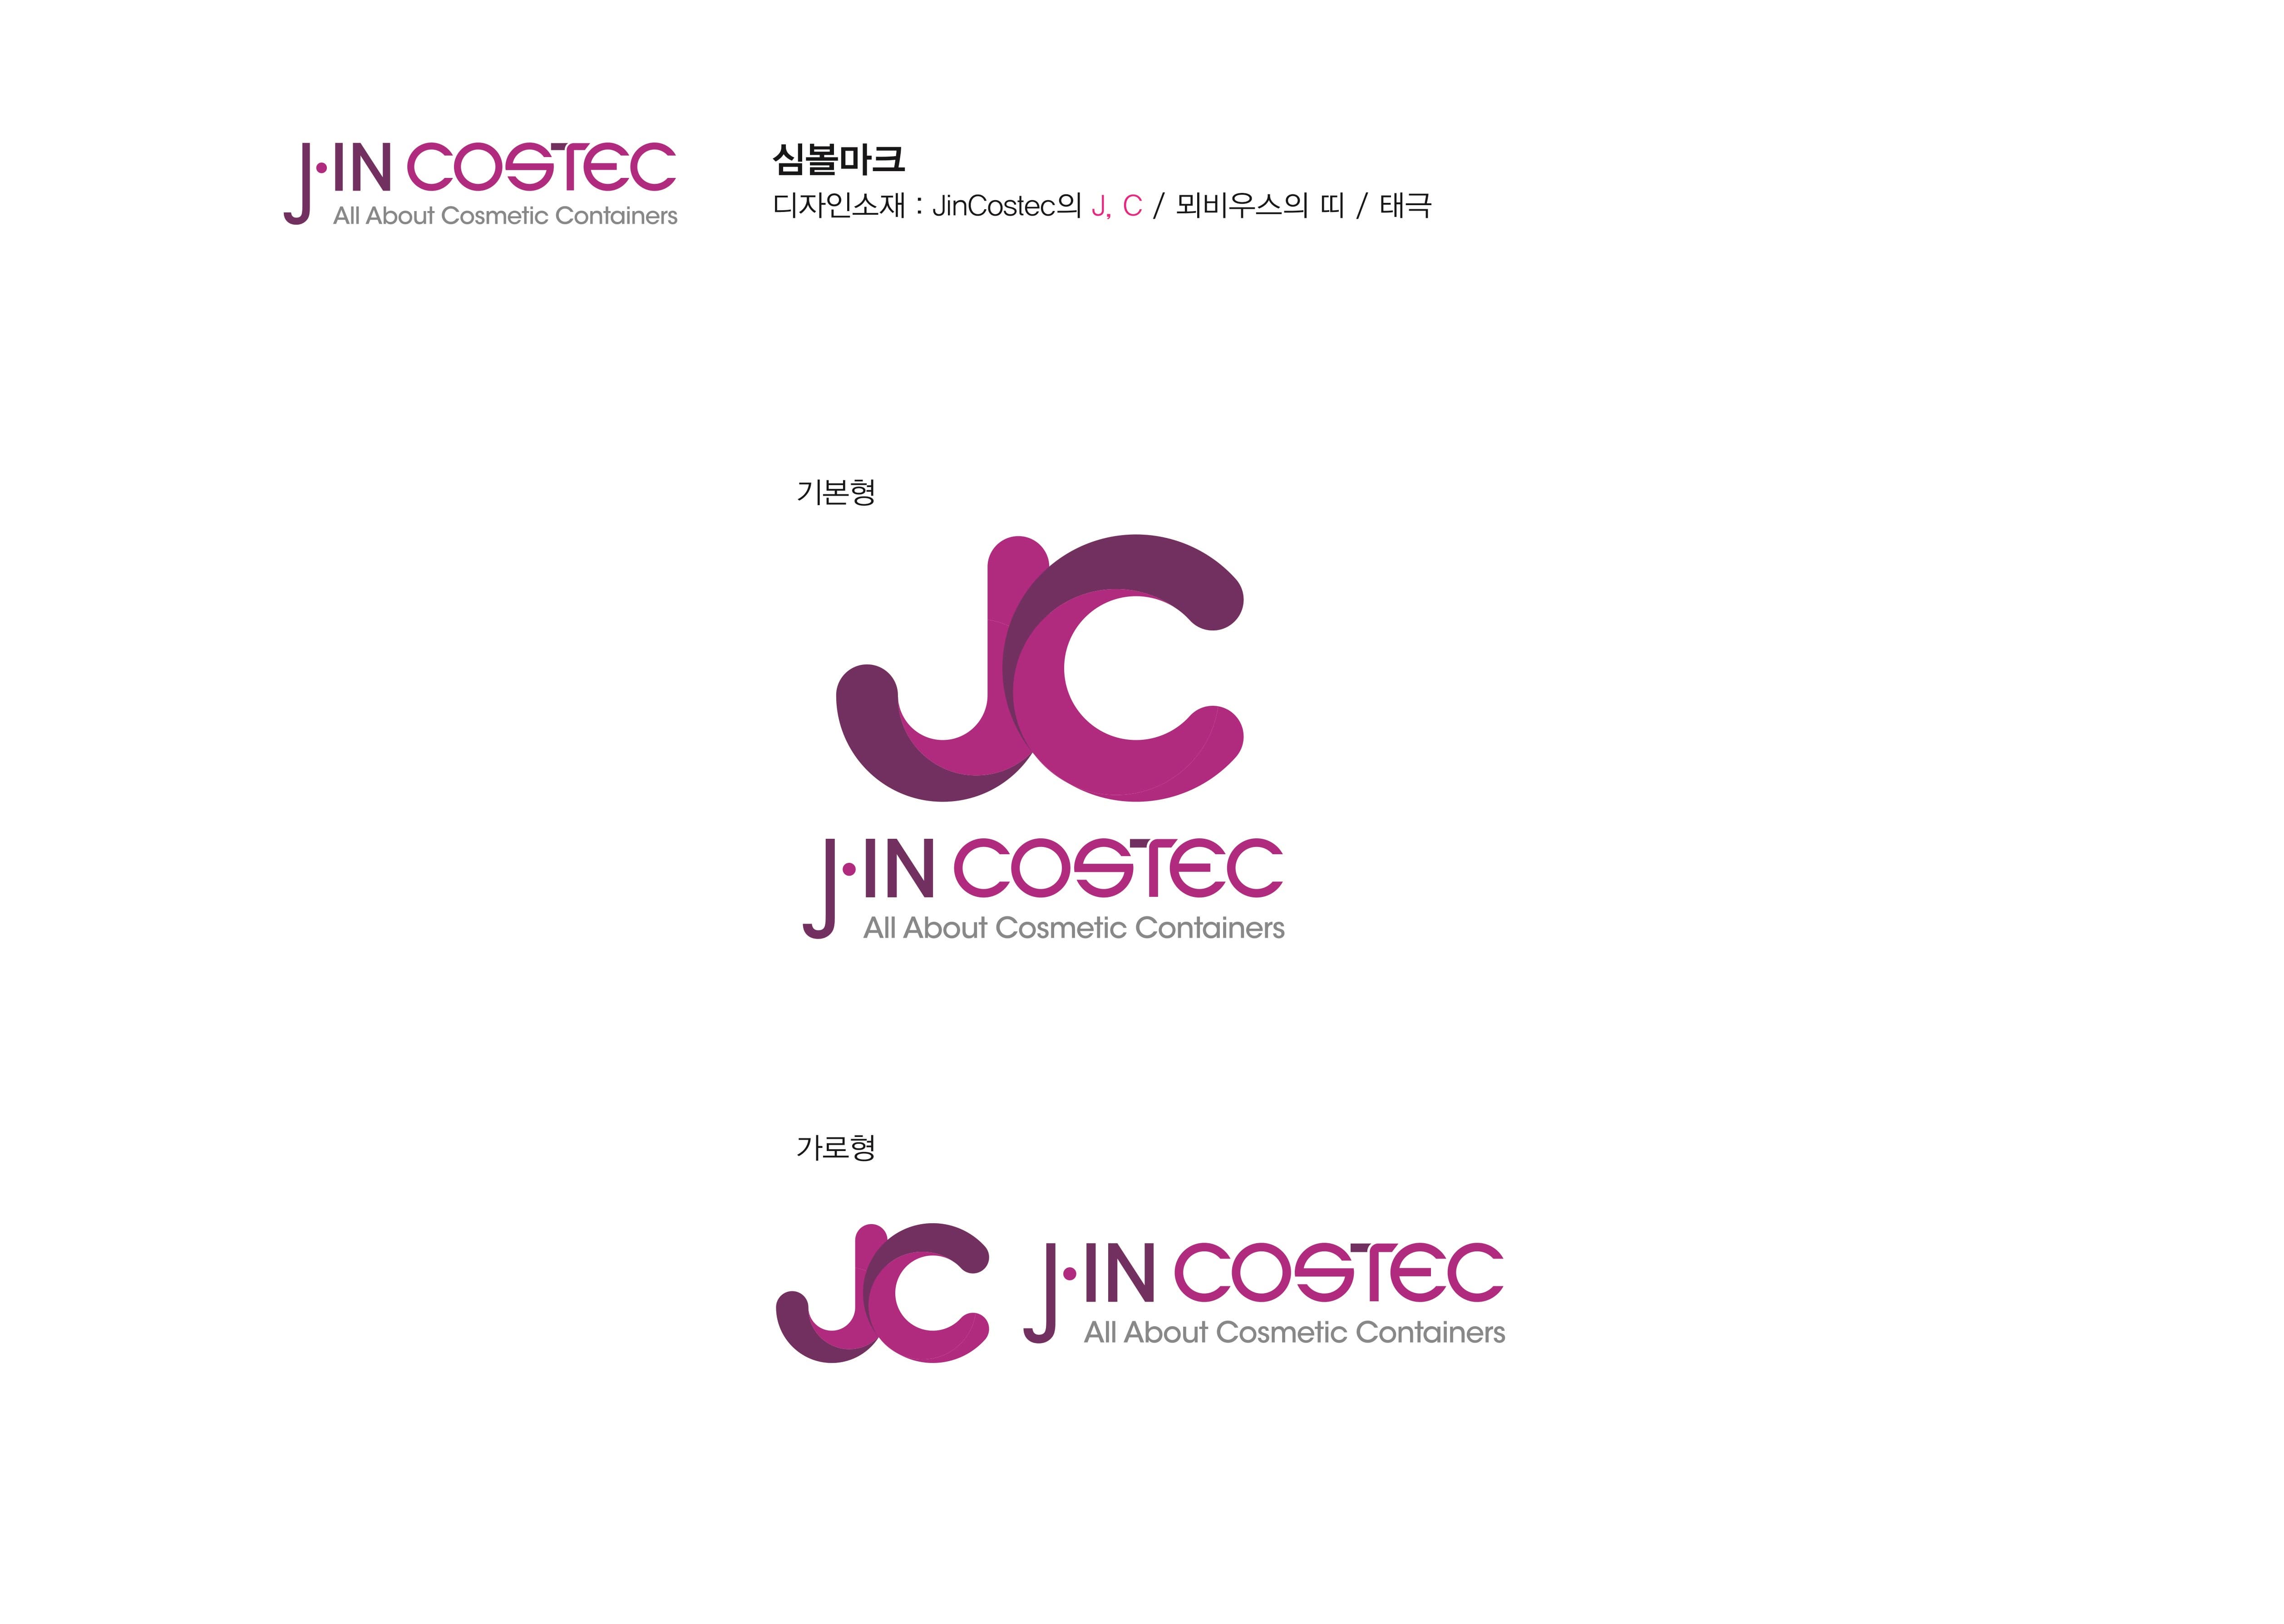 J-IN COSTEC